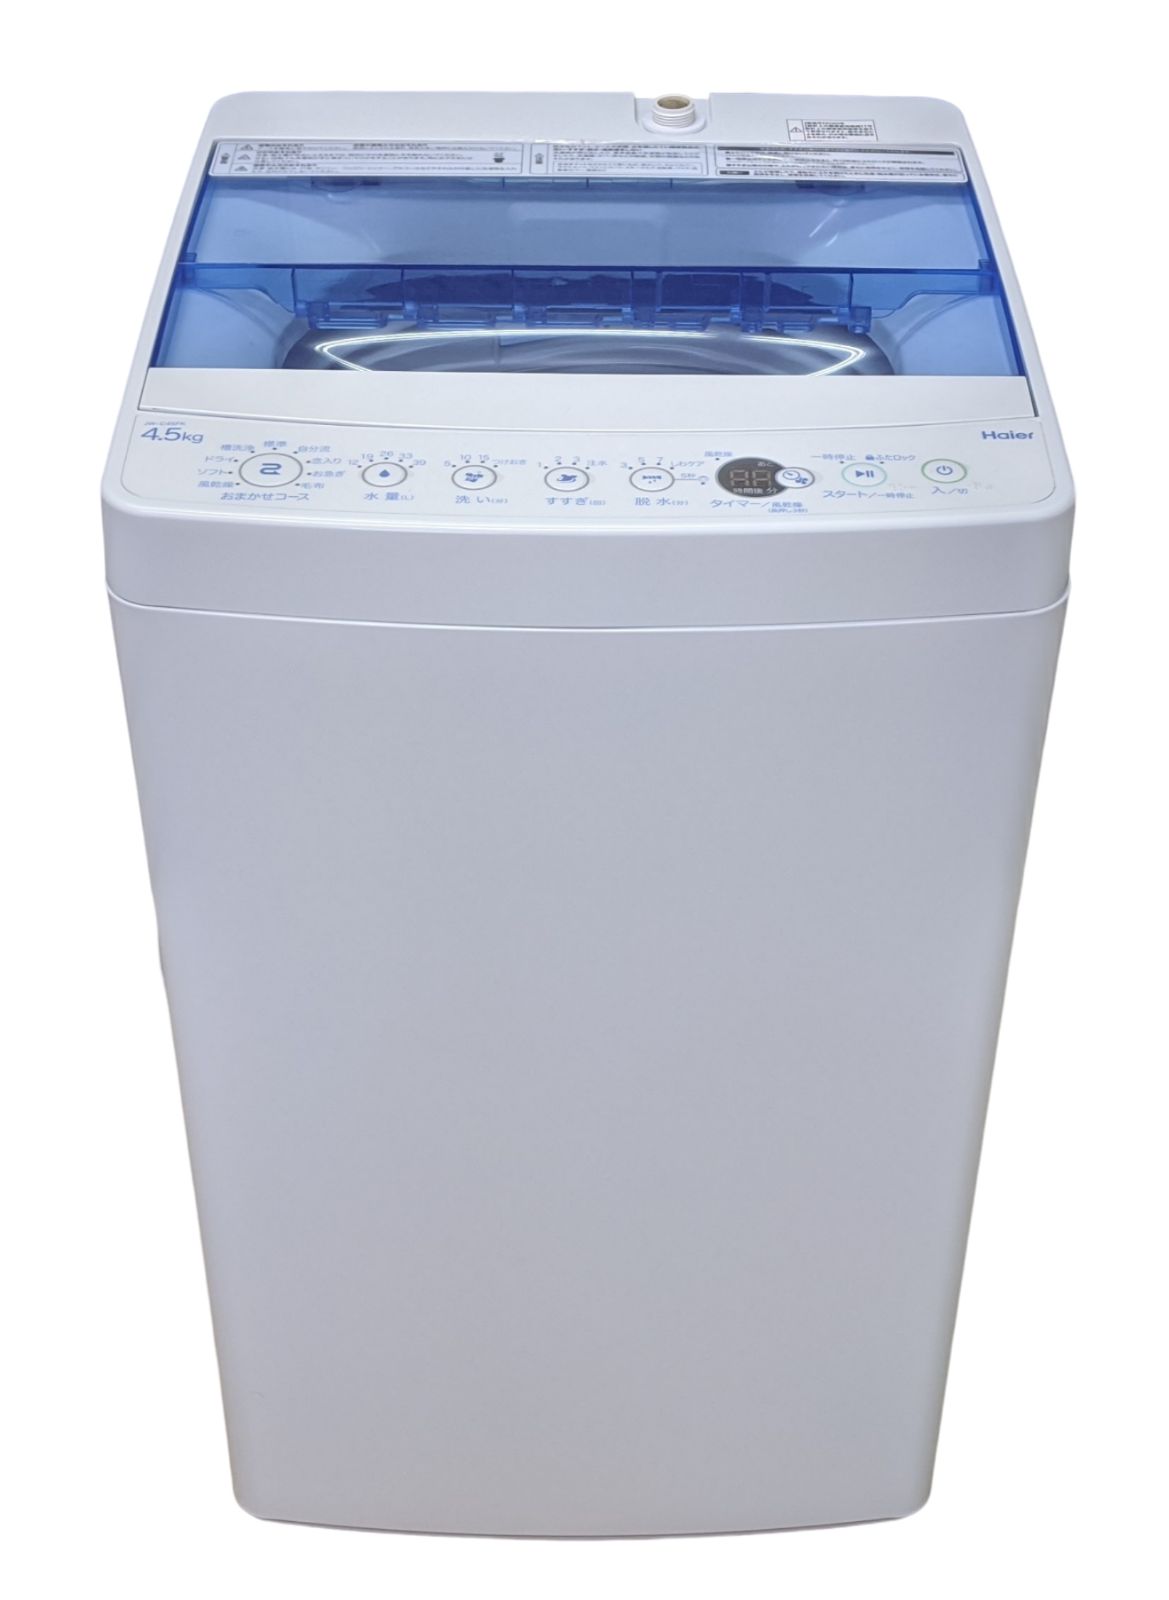 ハイアール2020年製 全自動洗濯機 - 洗濯機